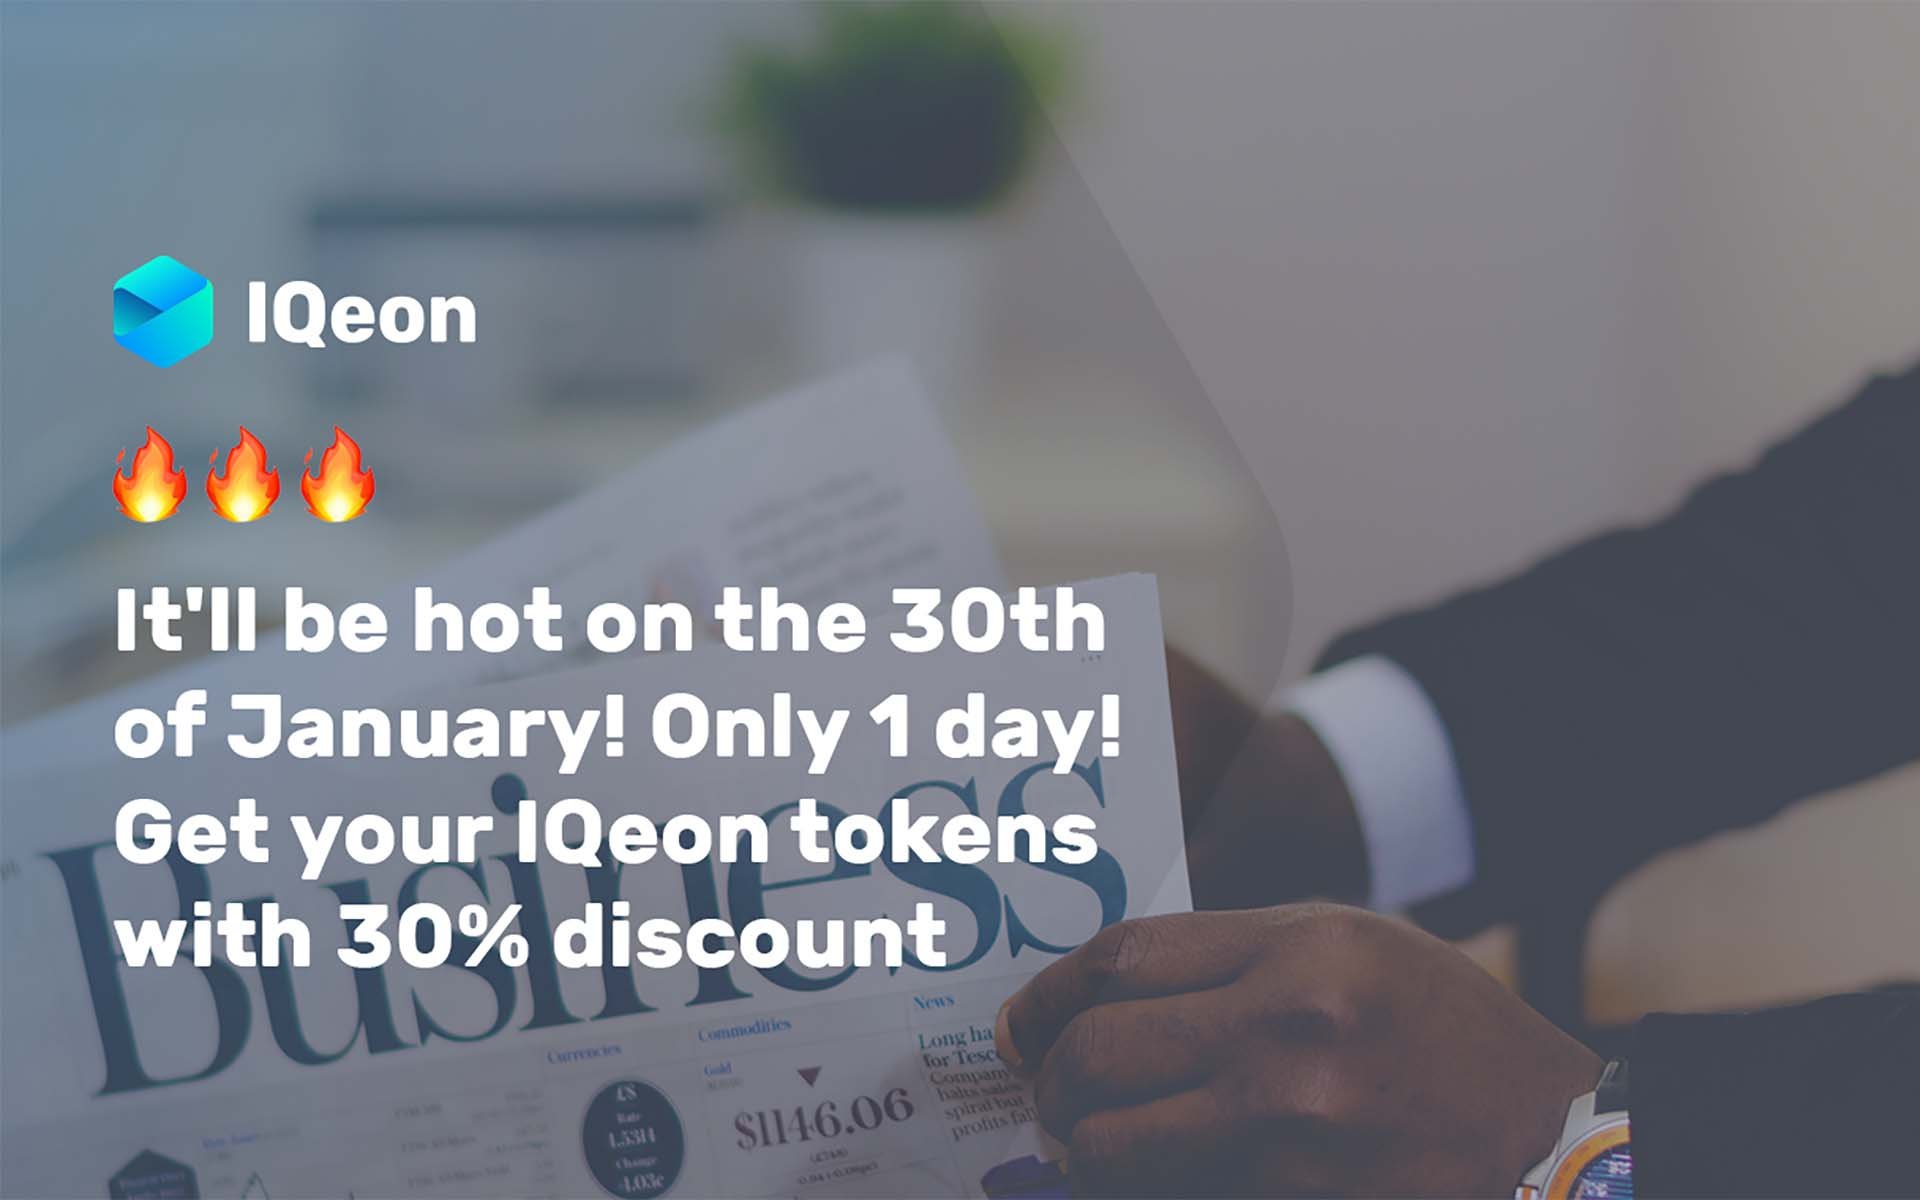 IQeon to Launch Main Round of ICO, Get 30% Bonus on January 30